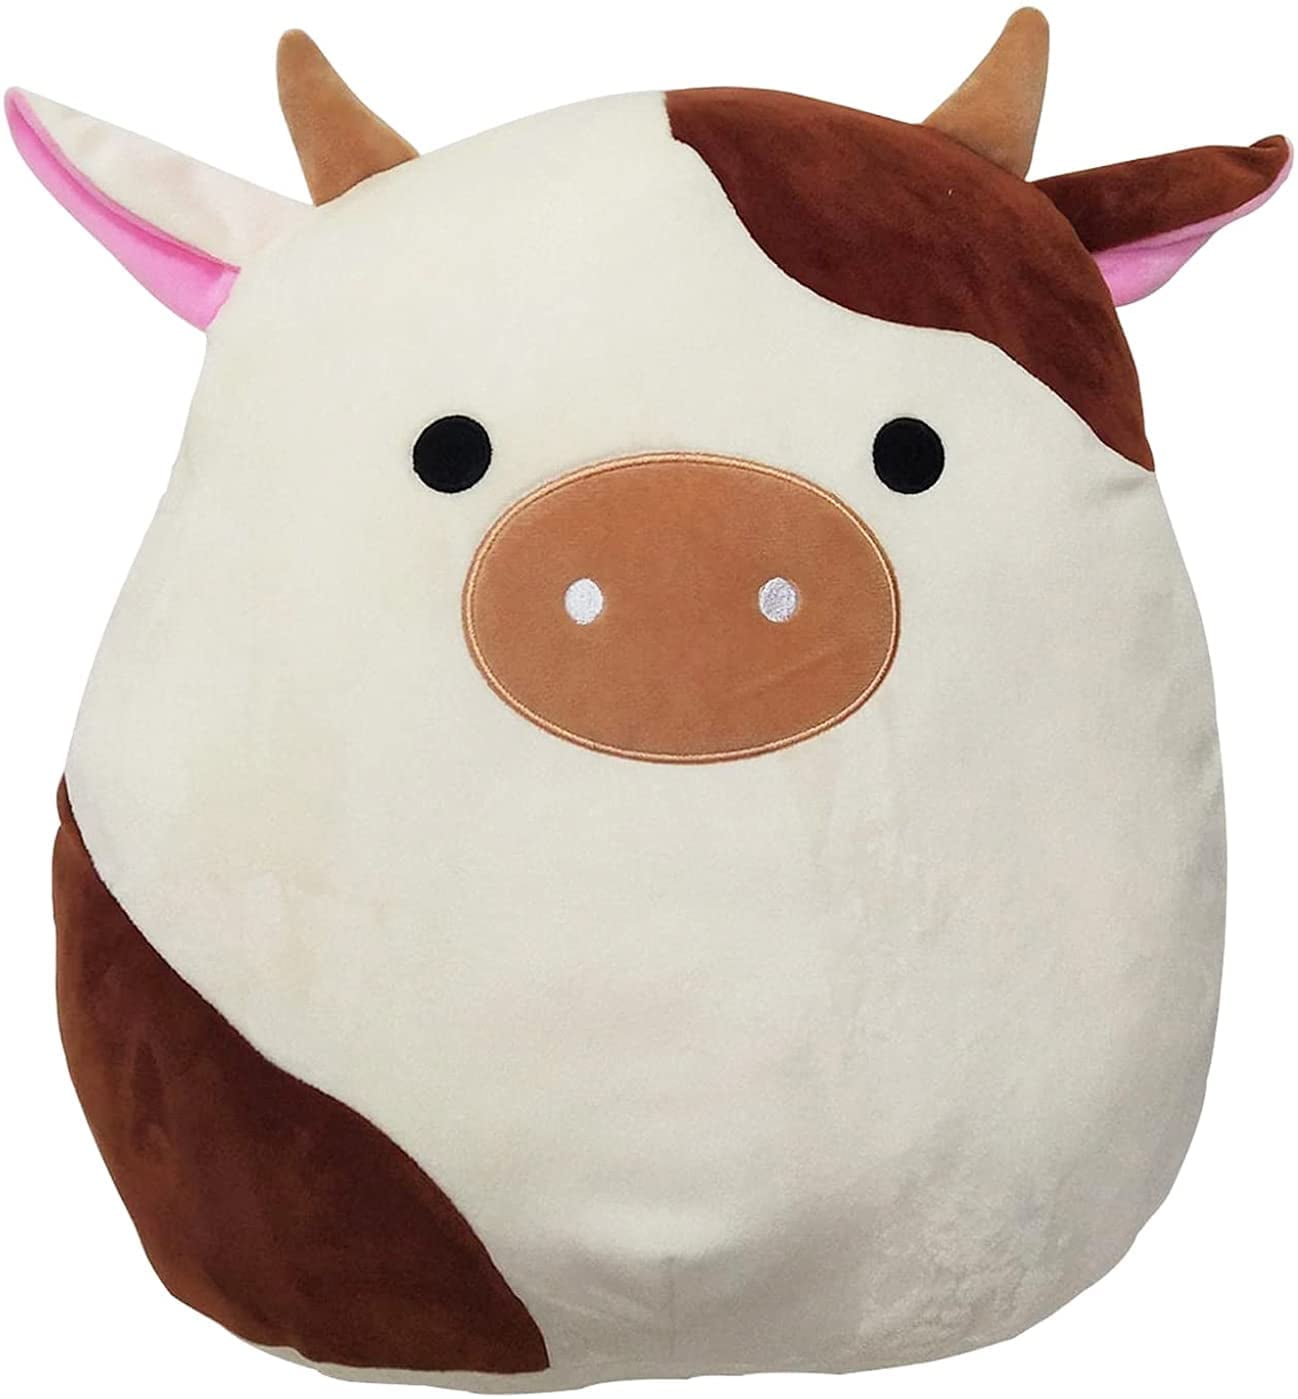 Big Pop Anime Cow Plush Pillow Toy Giant Soft Stuffed Milk Cow Animals Doll Gift 